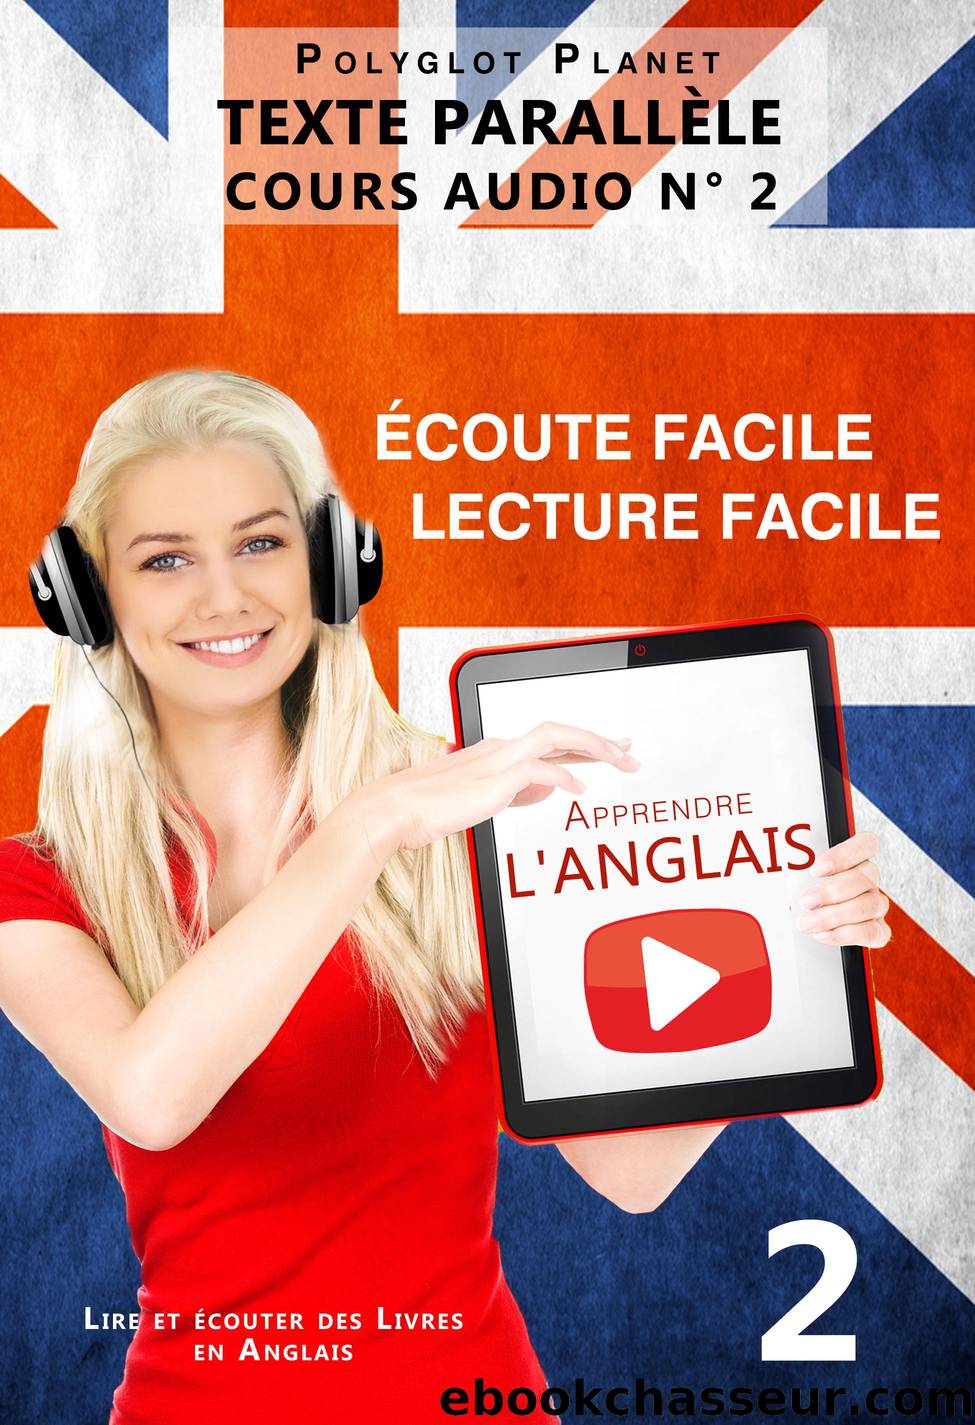 Apprendre l'anglais--Ãcoute facile | Lecture facile | Texte parallÃ¨le--COURS AUDIO NÂ° 2 by Polyglot Planet